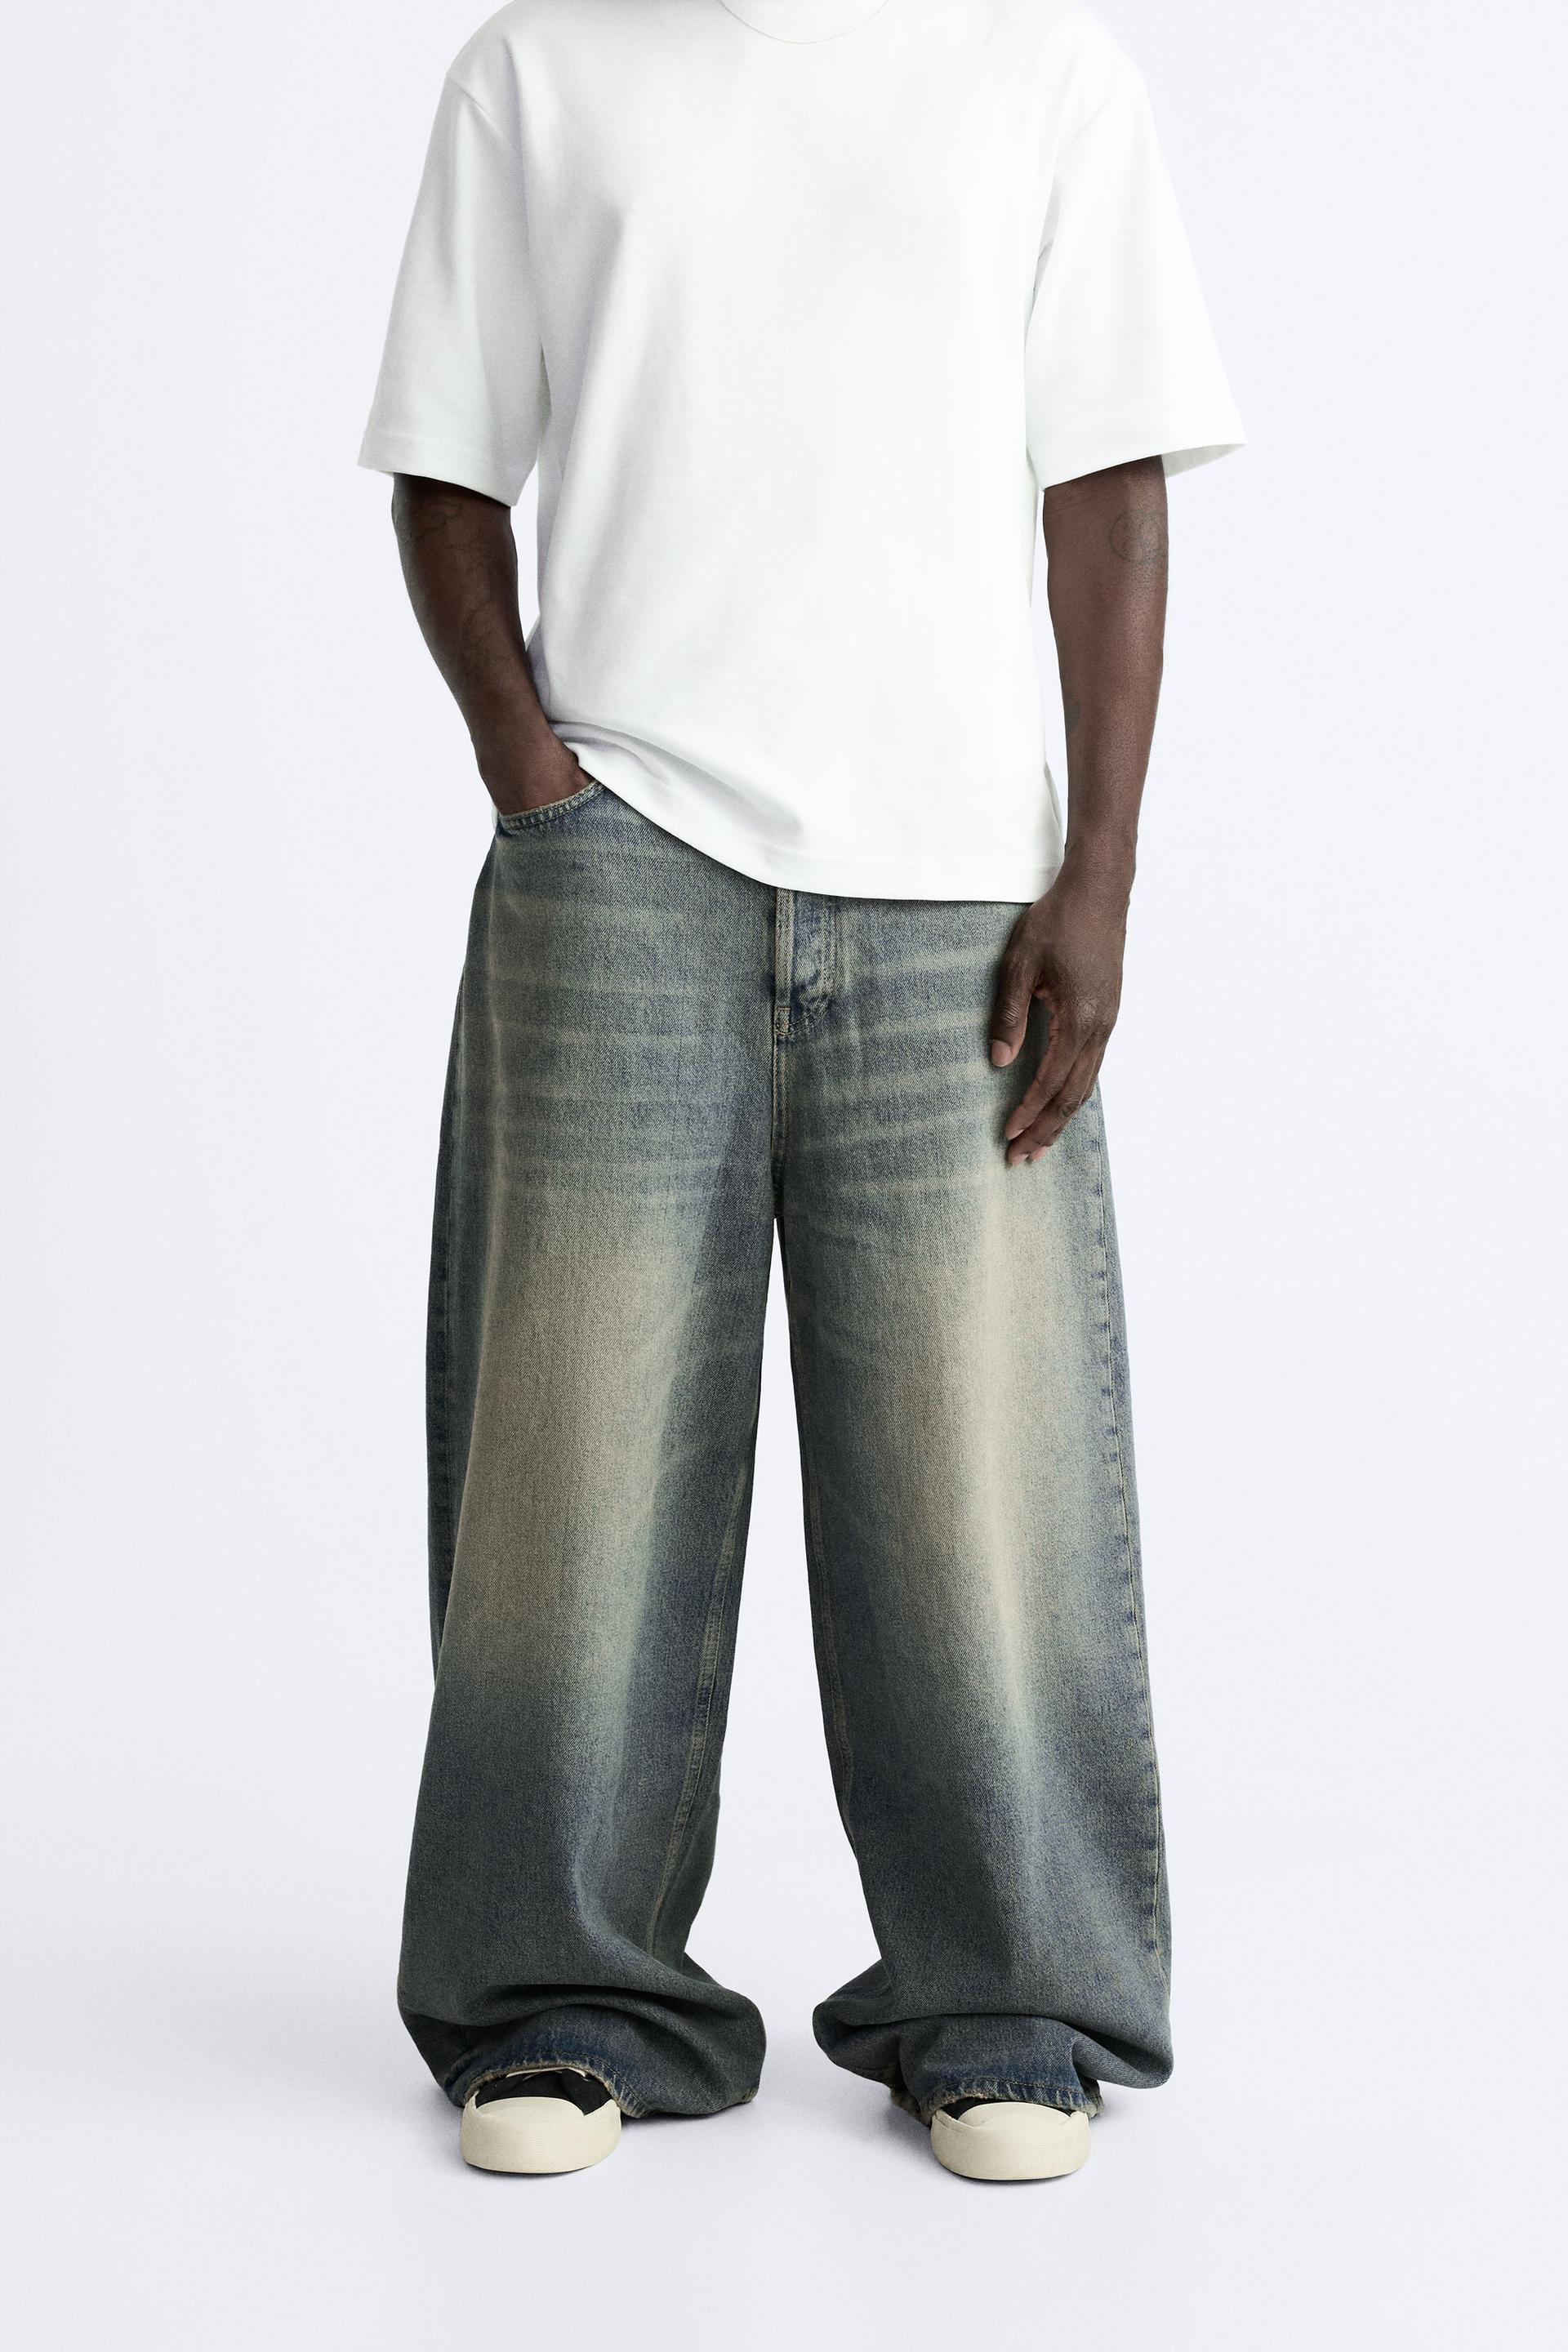 Zara Baggy Jeans  Denim skort, Baggy jeans, Zara jeans